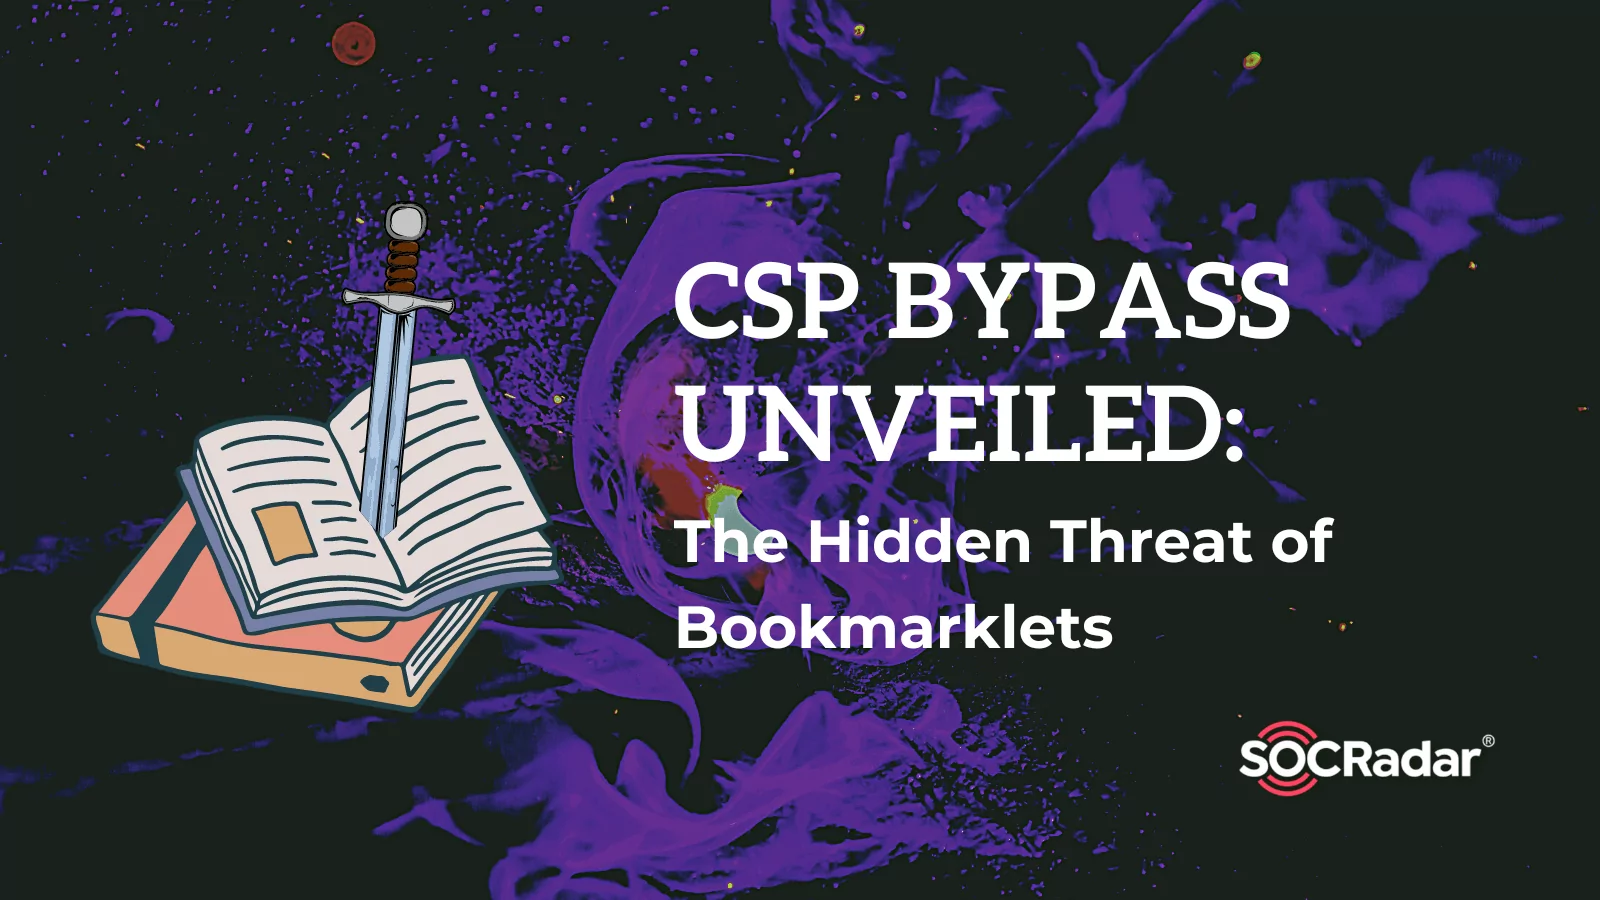 SOCRadar® Cyber Intelligence Inc. | CSP Bypass Unveiled: The Hidden Threat of Bookmarklets